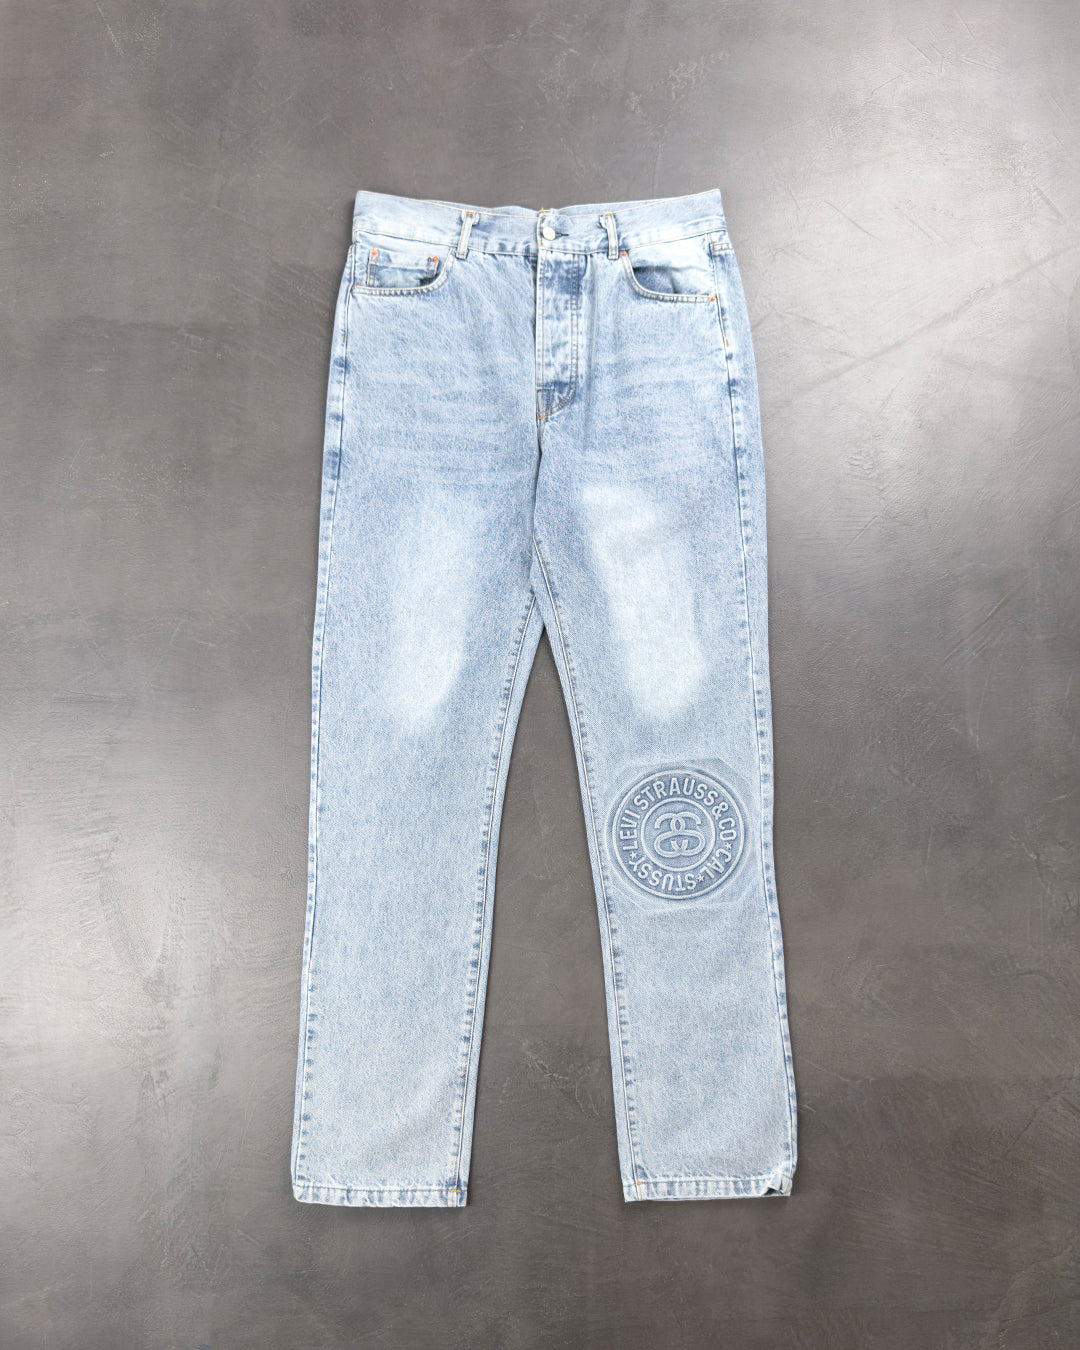 STUSSY & Levi's Embossed 501 Jeans